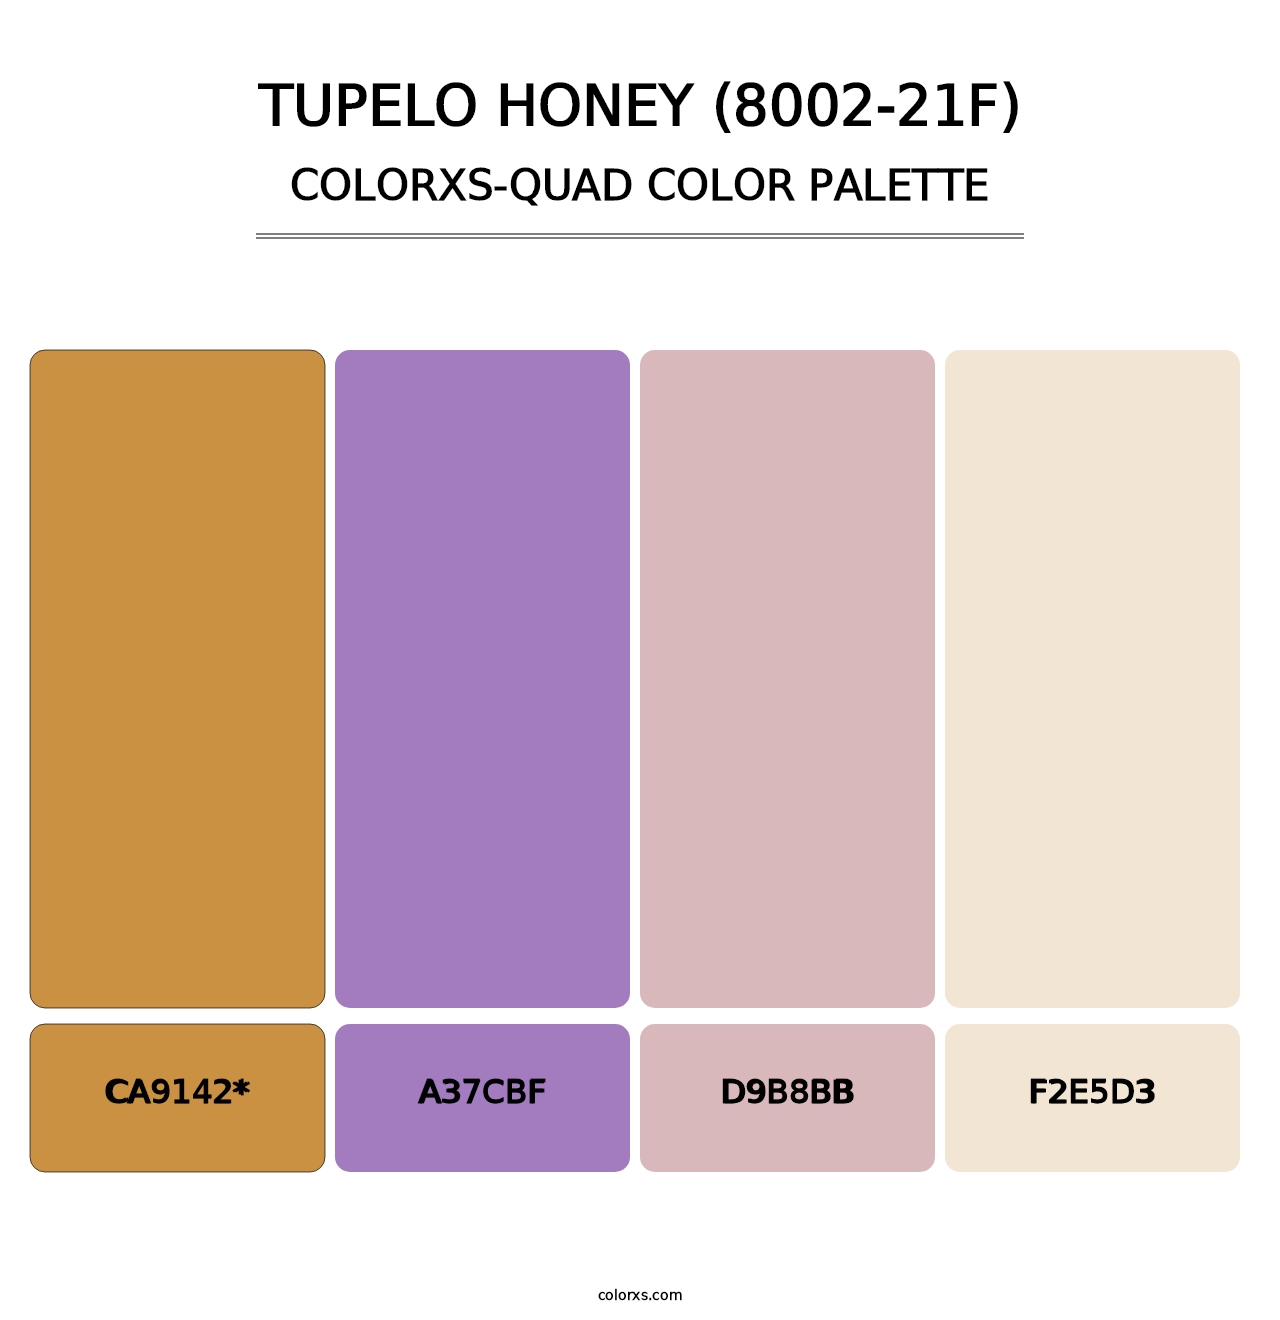 Tupelo Honey (8002-21F) - Colorxs Quad Palette